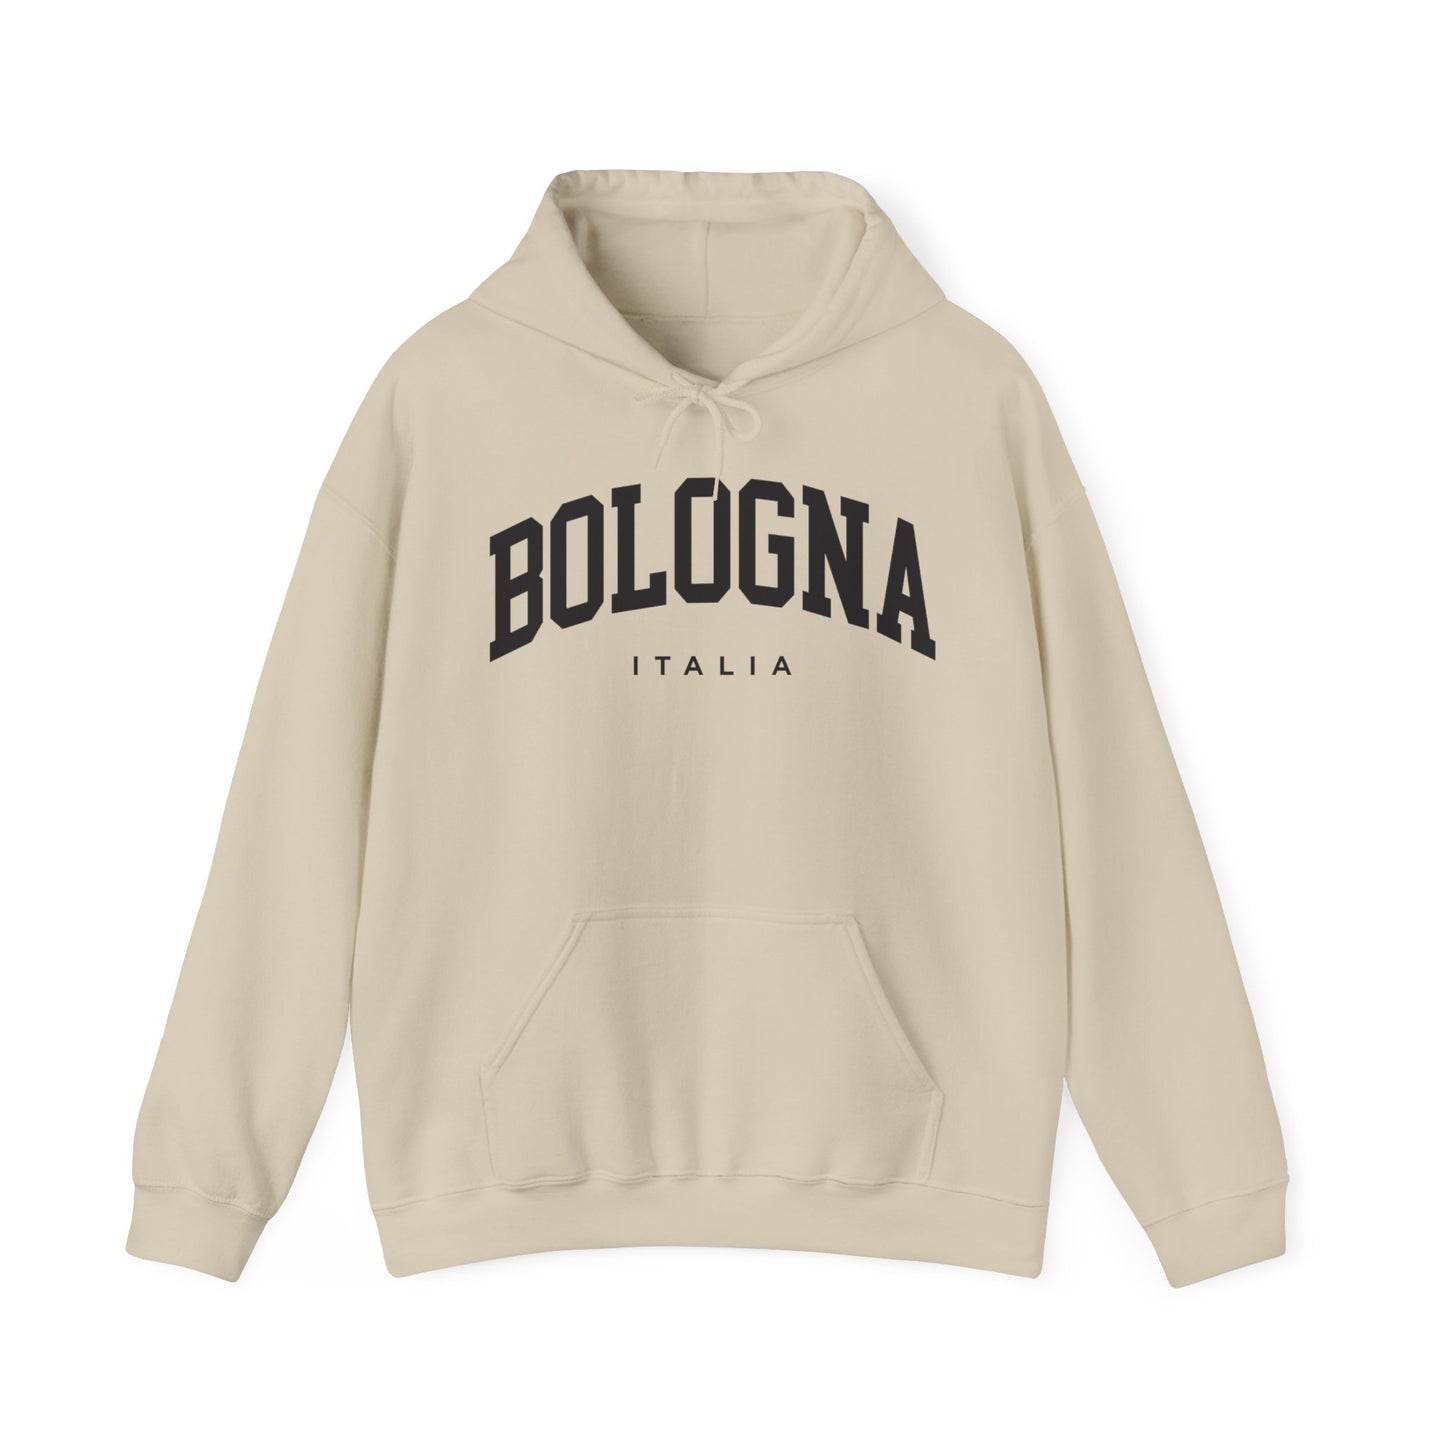 Bologna Italy Hoodie